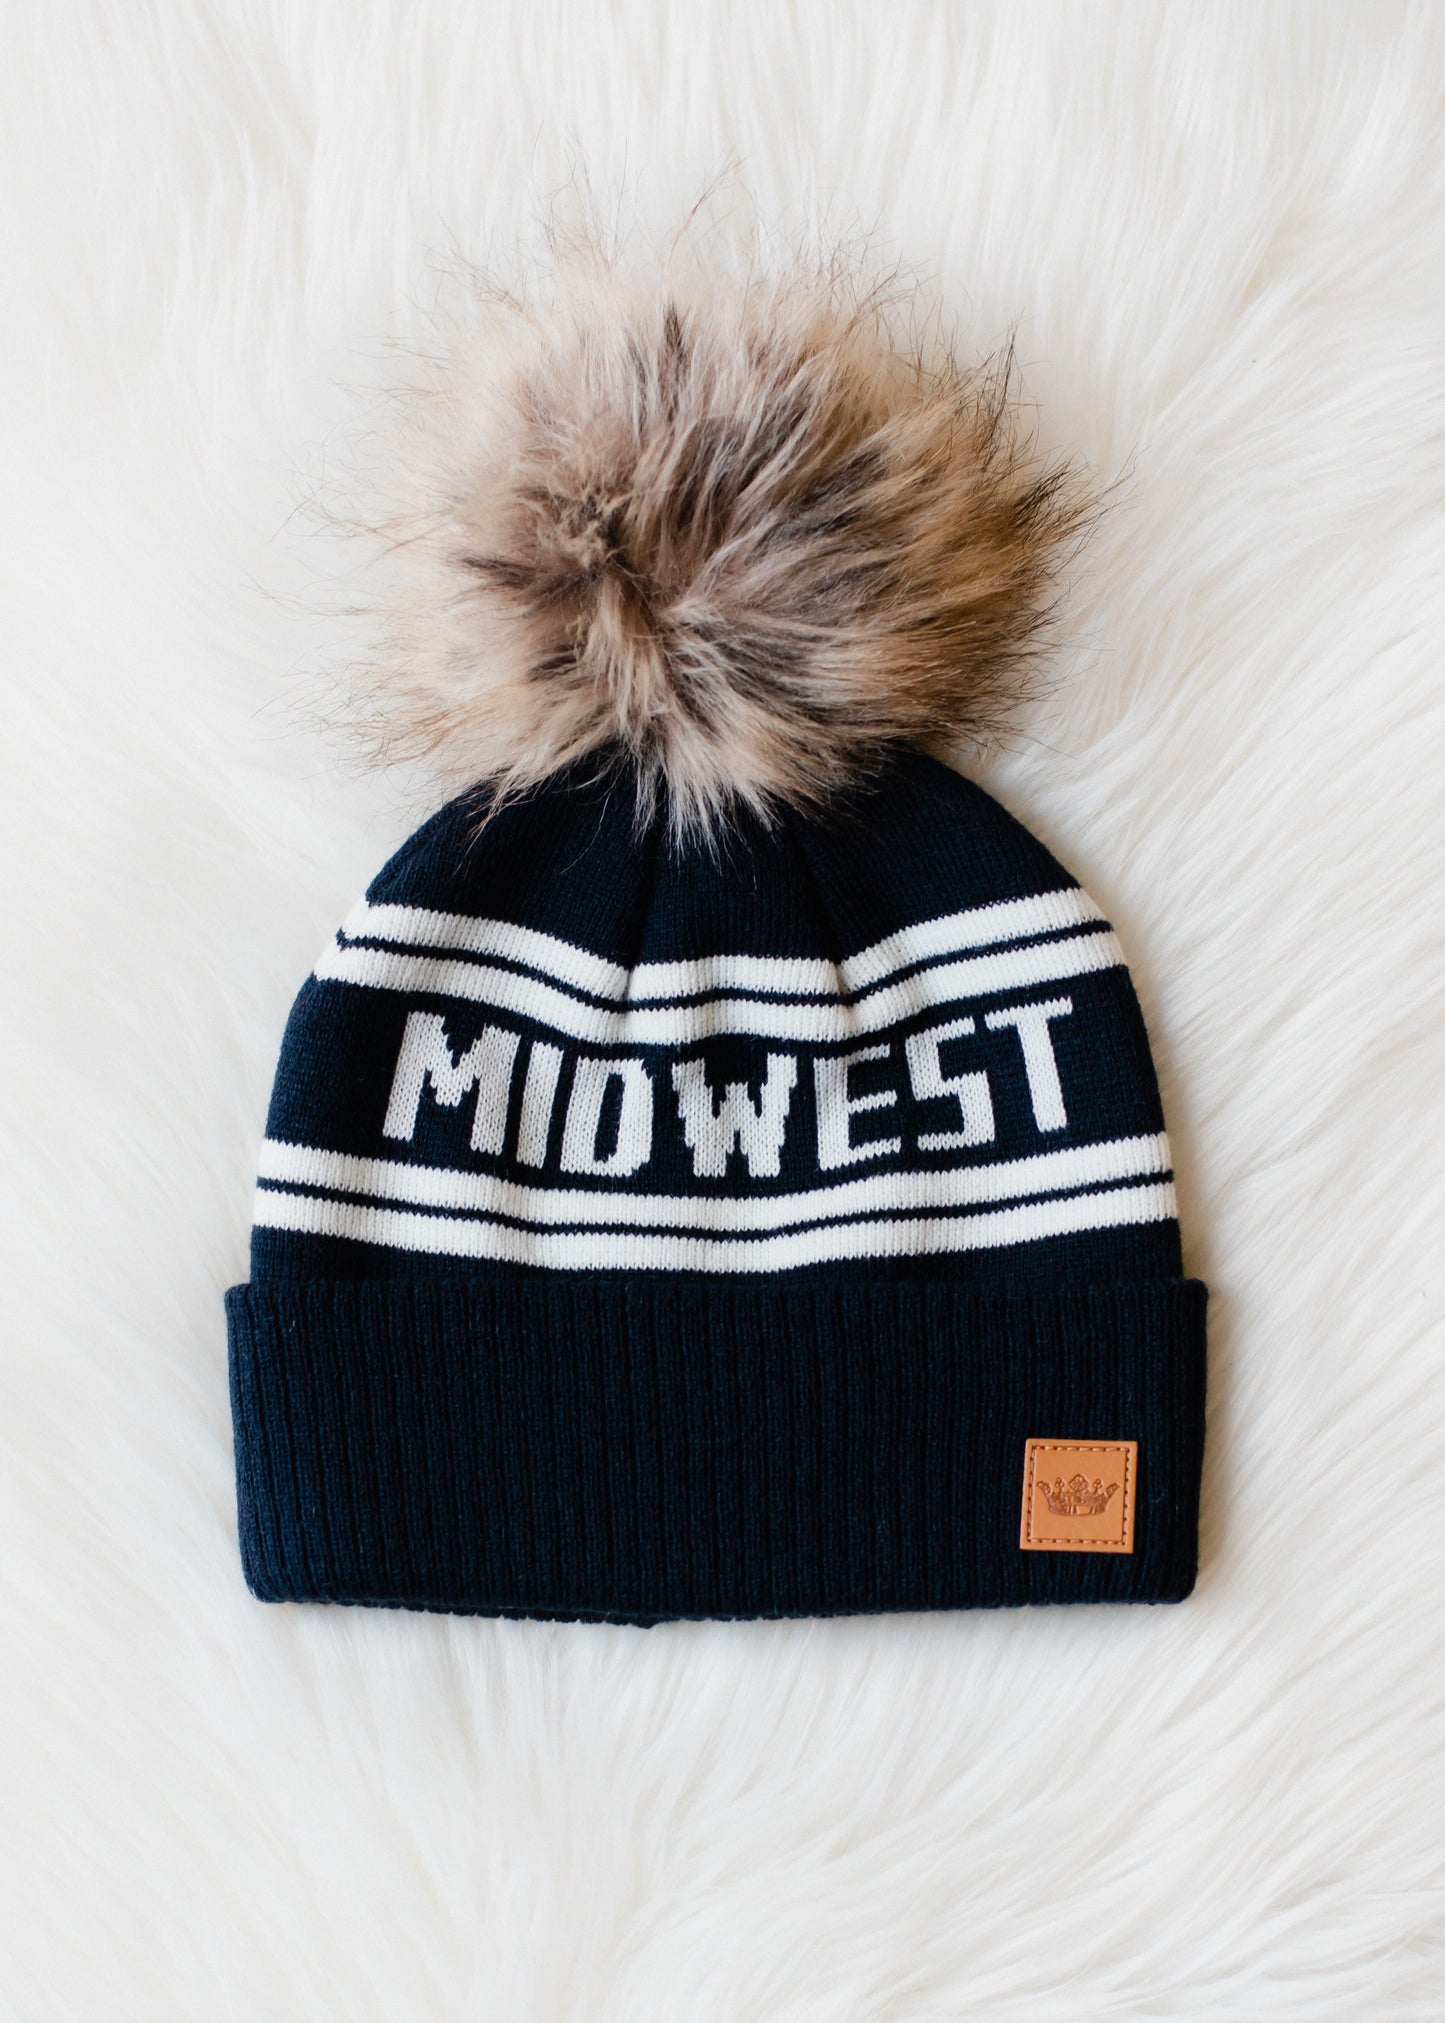 Midwest Pom Stocking Hat